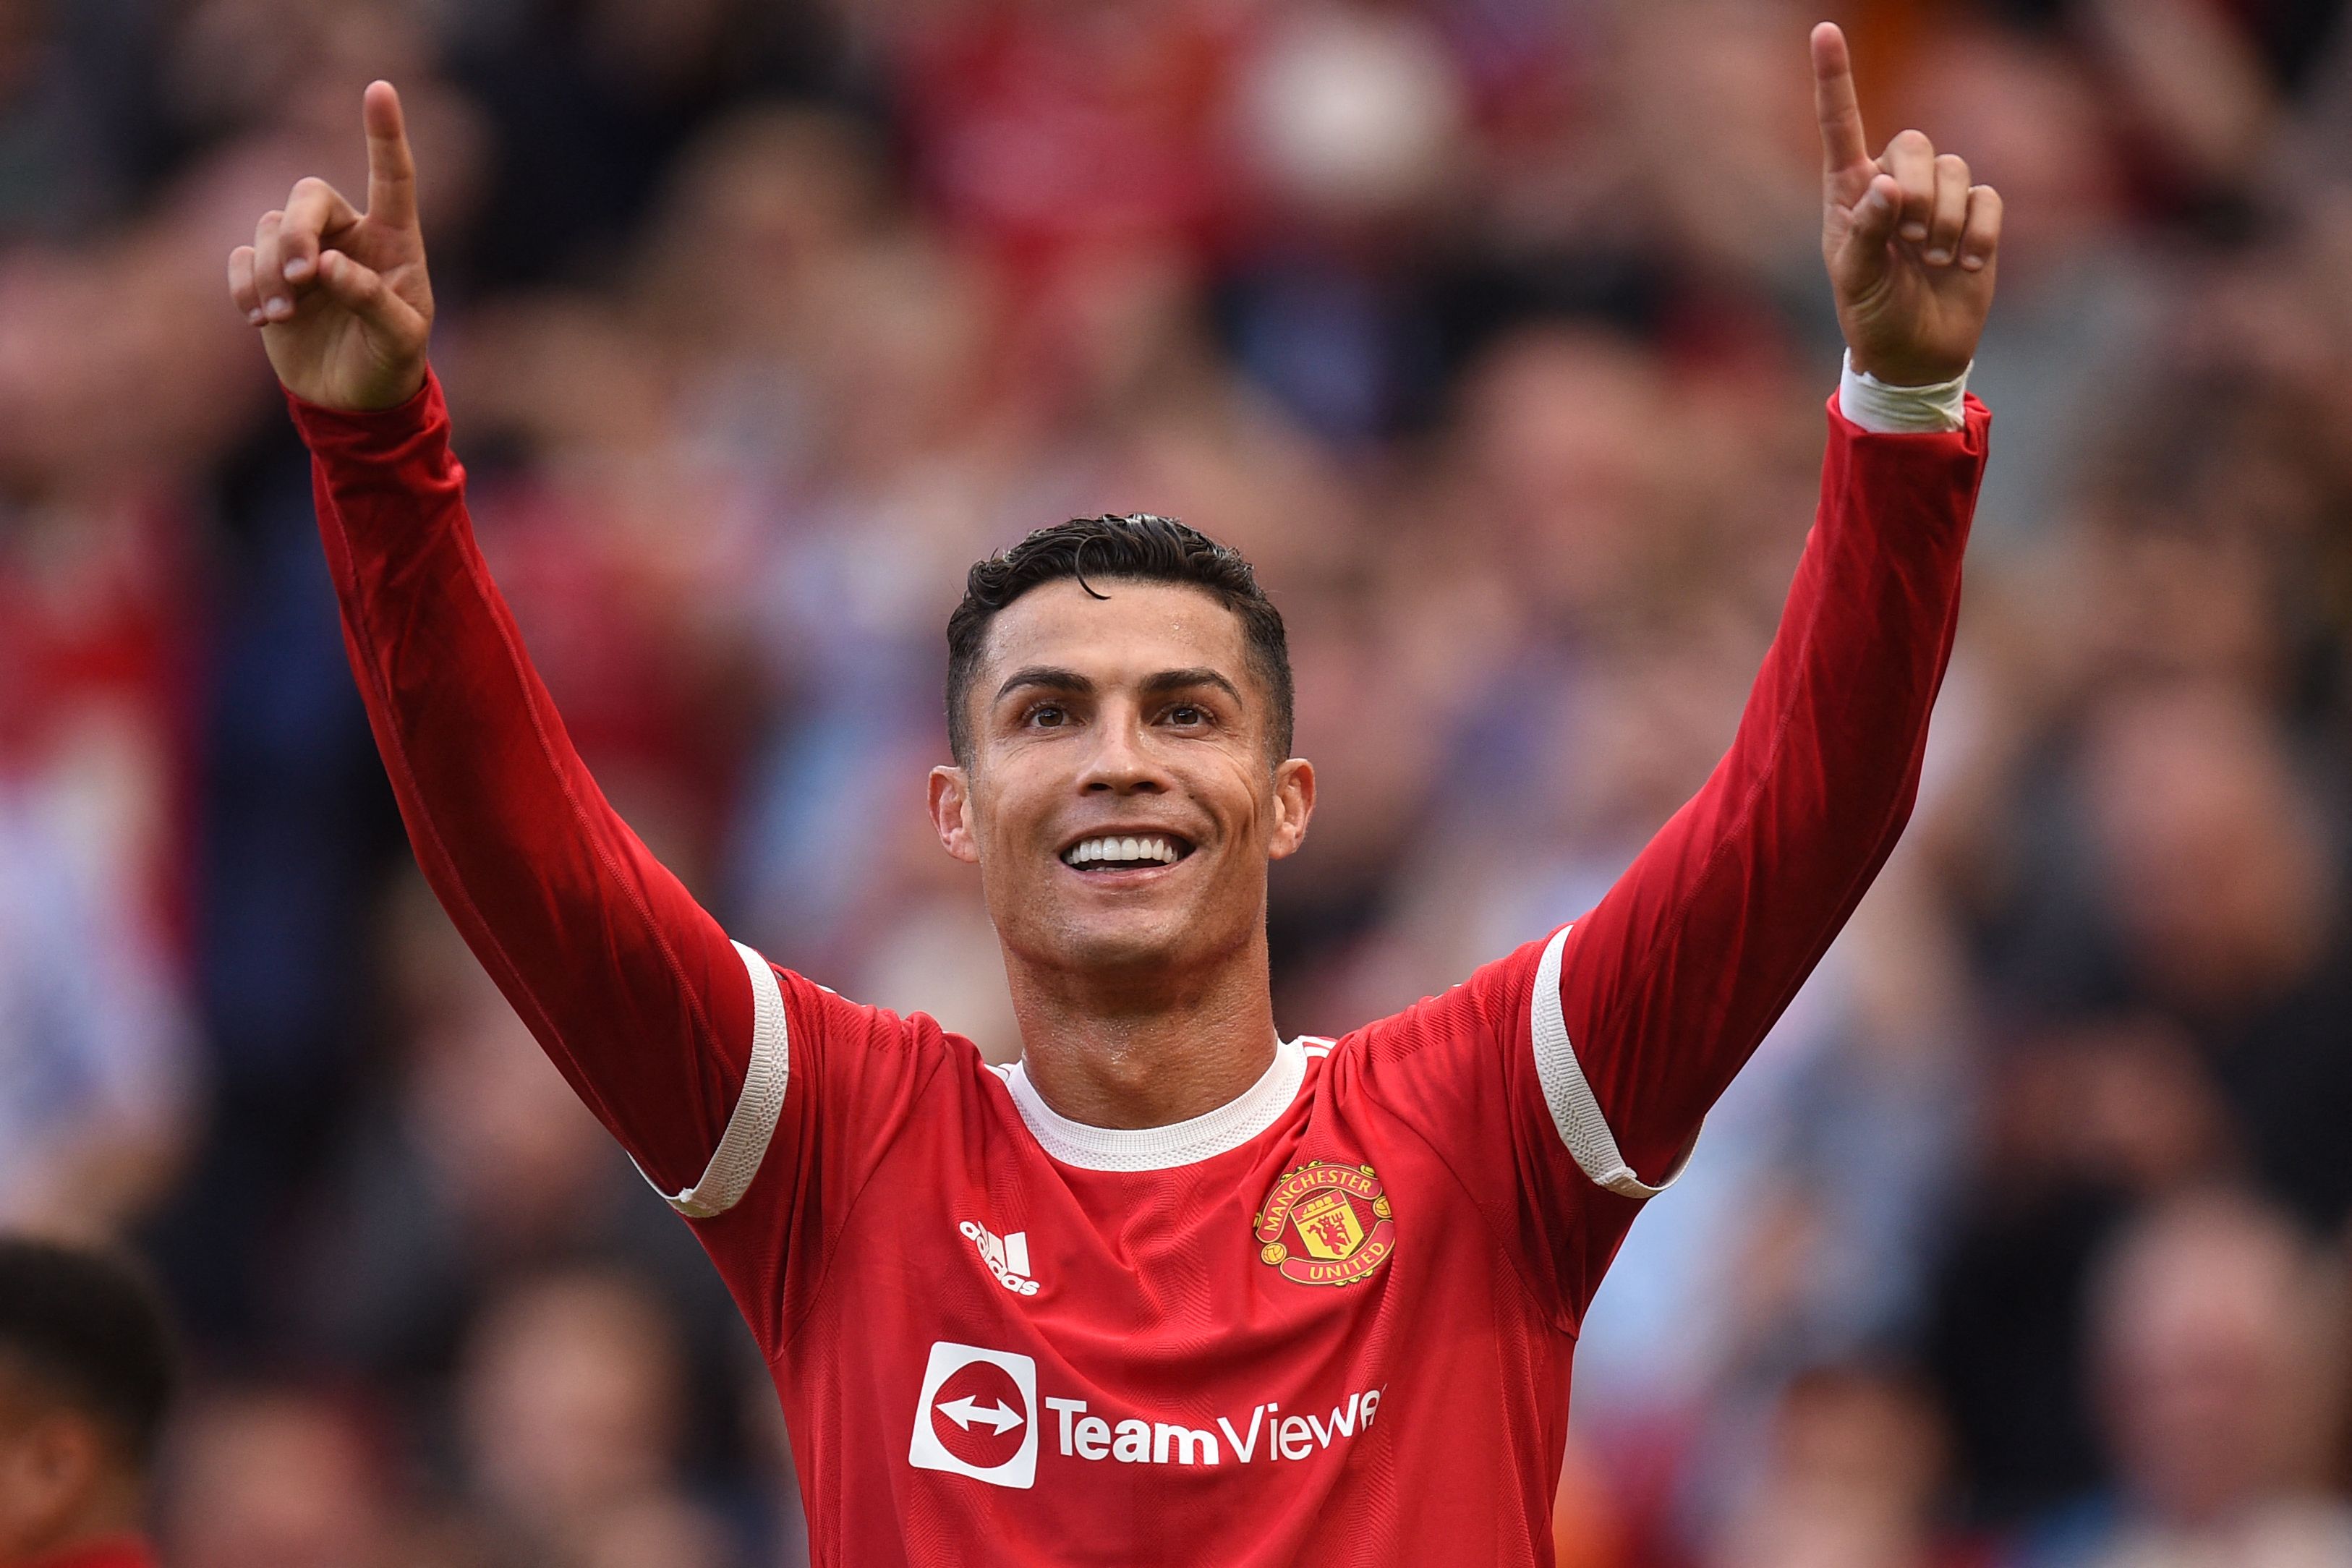 Manchester United's Portuguese striker Cristiano Ronaldo celebrates after scoring a goal